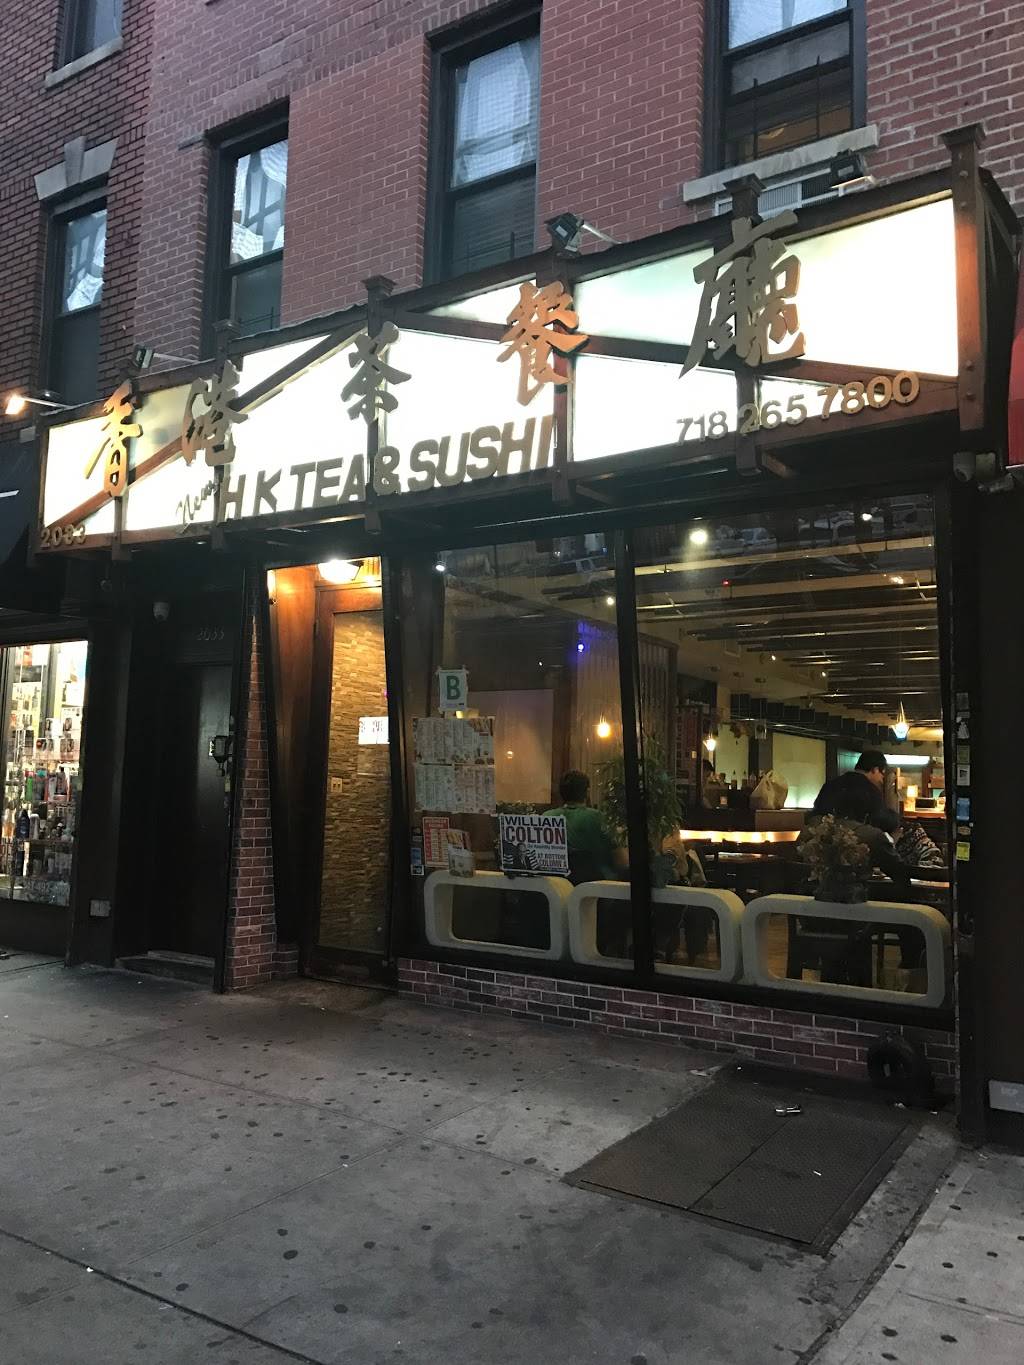 HK Tea & Sushi | cafe | 2033 86th St, Brooklyn, NY 11214, USA | 7182657800 OR +1 718-265-7800